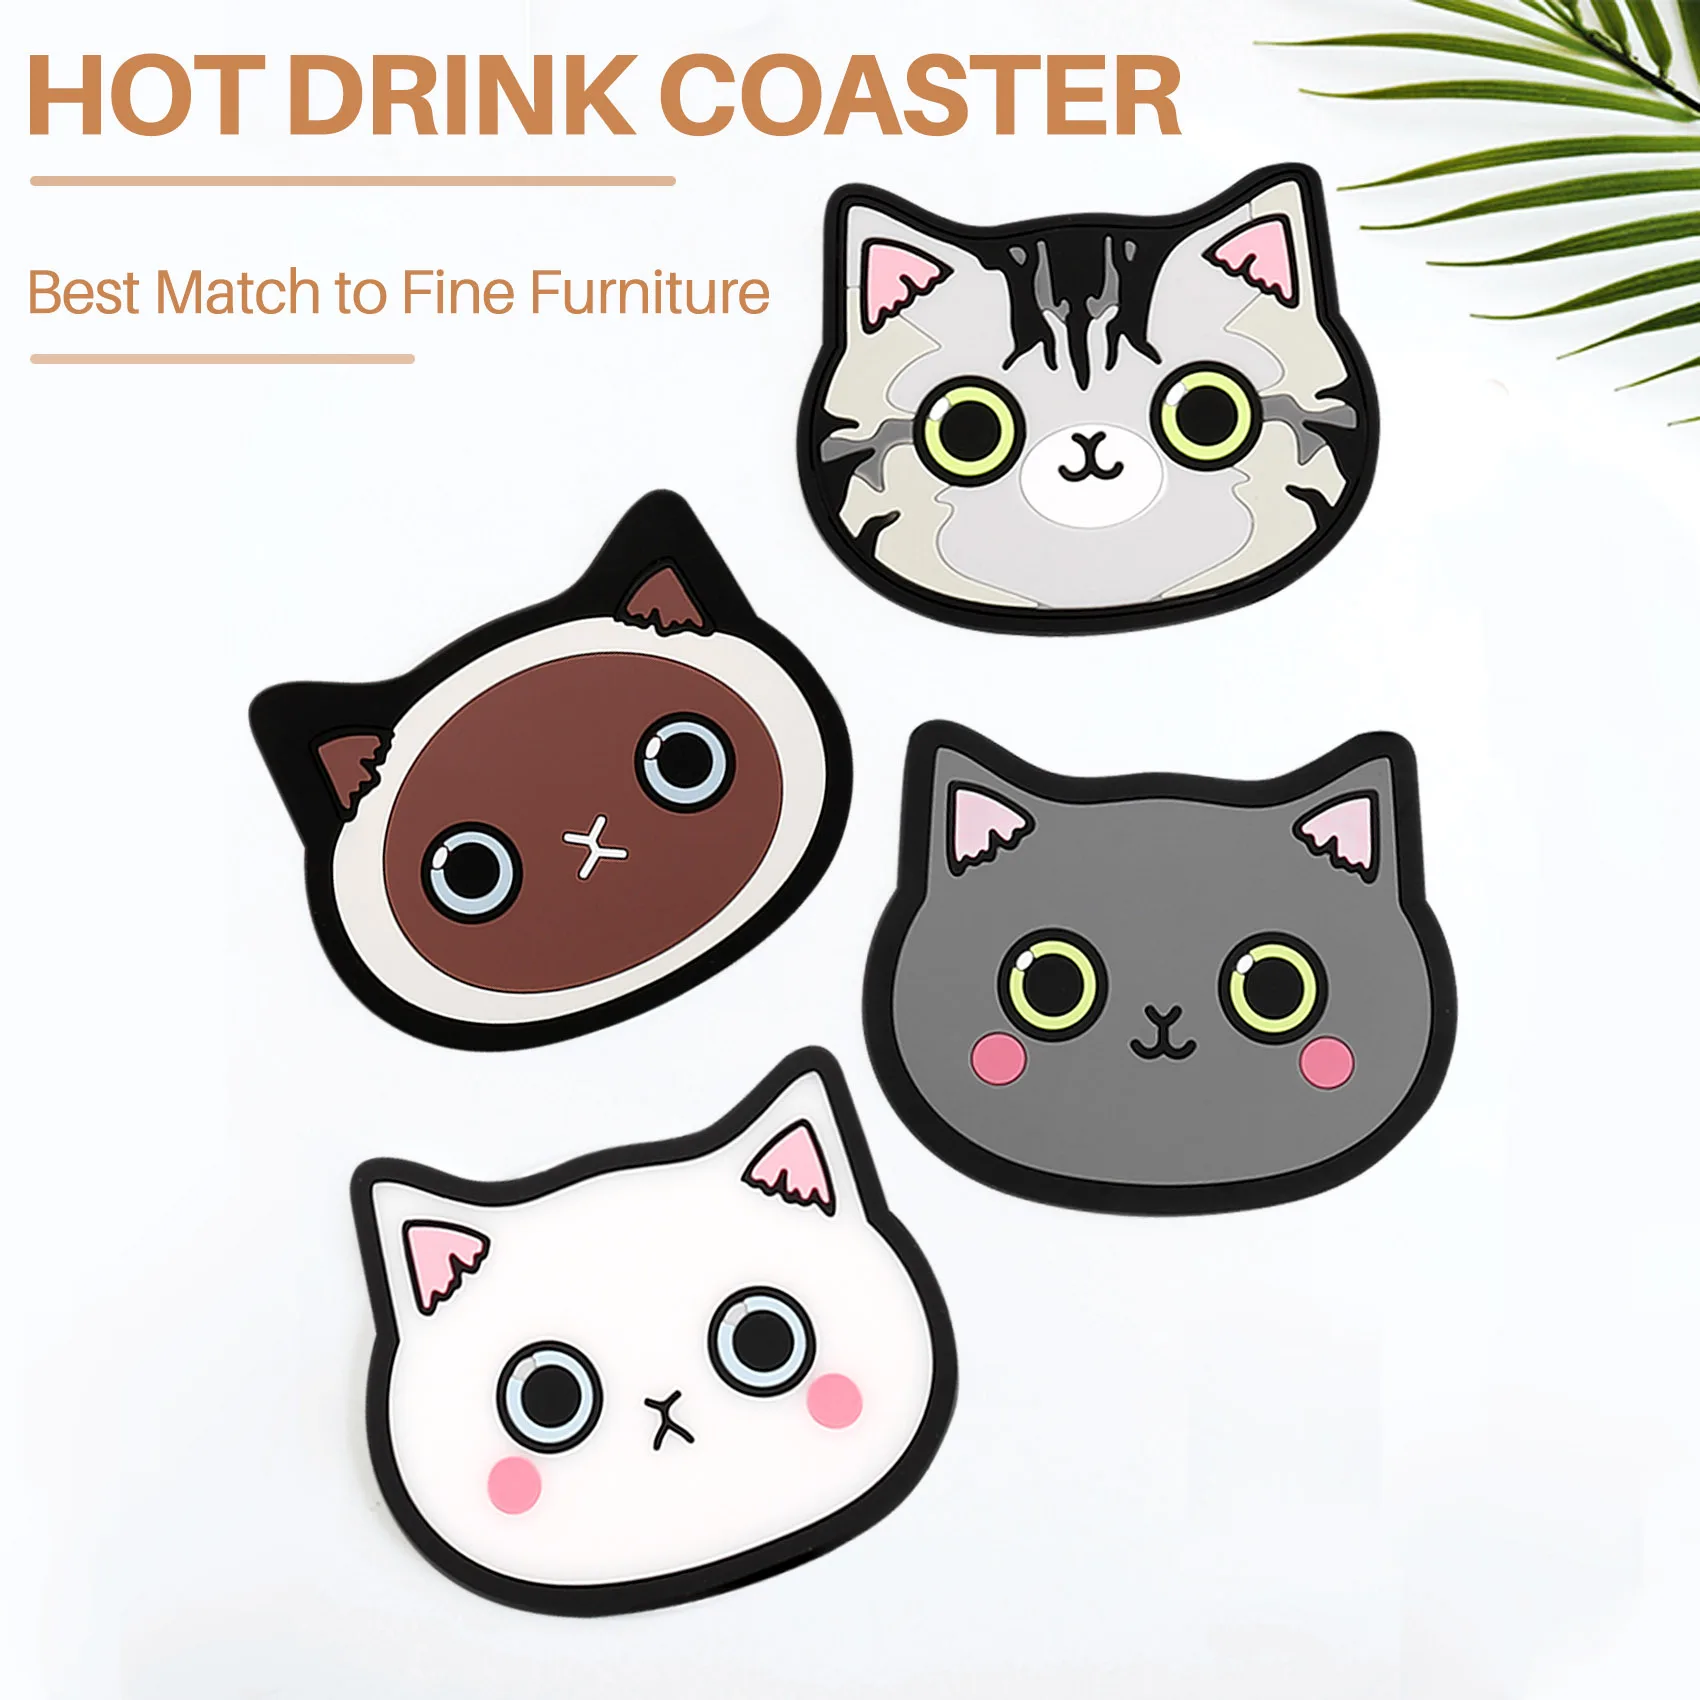 

10 Pcs/Set Cat Silicone Mat Cup Bar Home Cartoon Animal Coaster,for Hot Drink Coffee Milk Tea Mug Cup Accessories